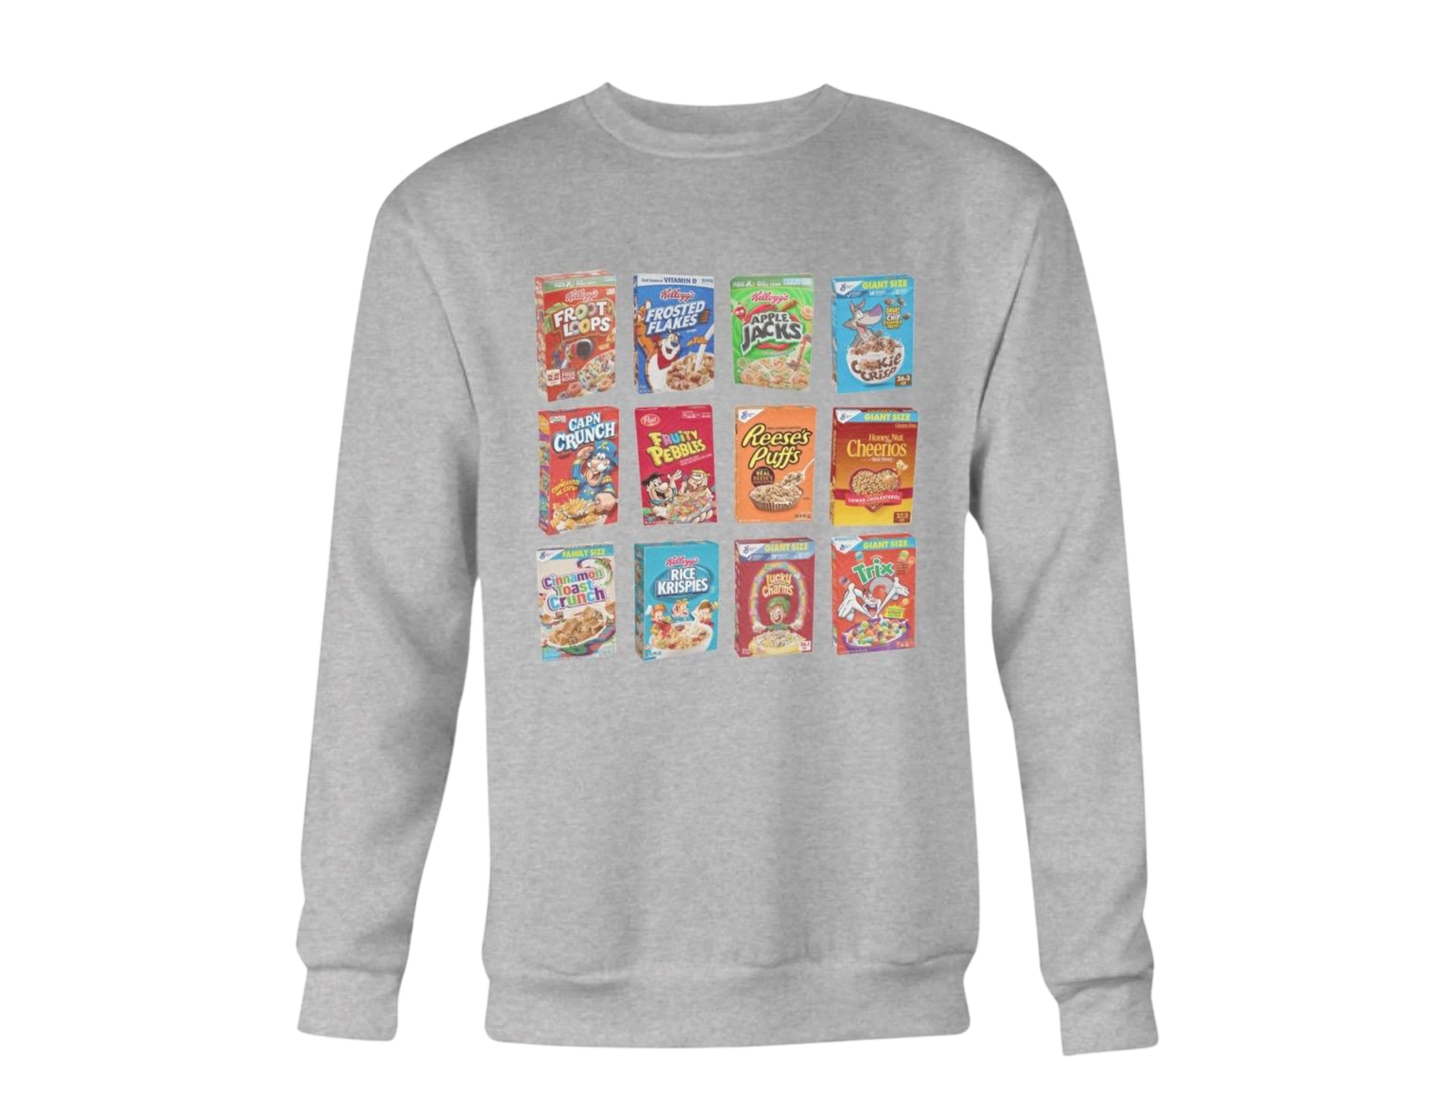 Breakfast Club Sweater Casual Menswear Crewneck Colorful